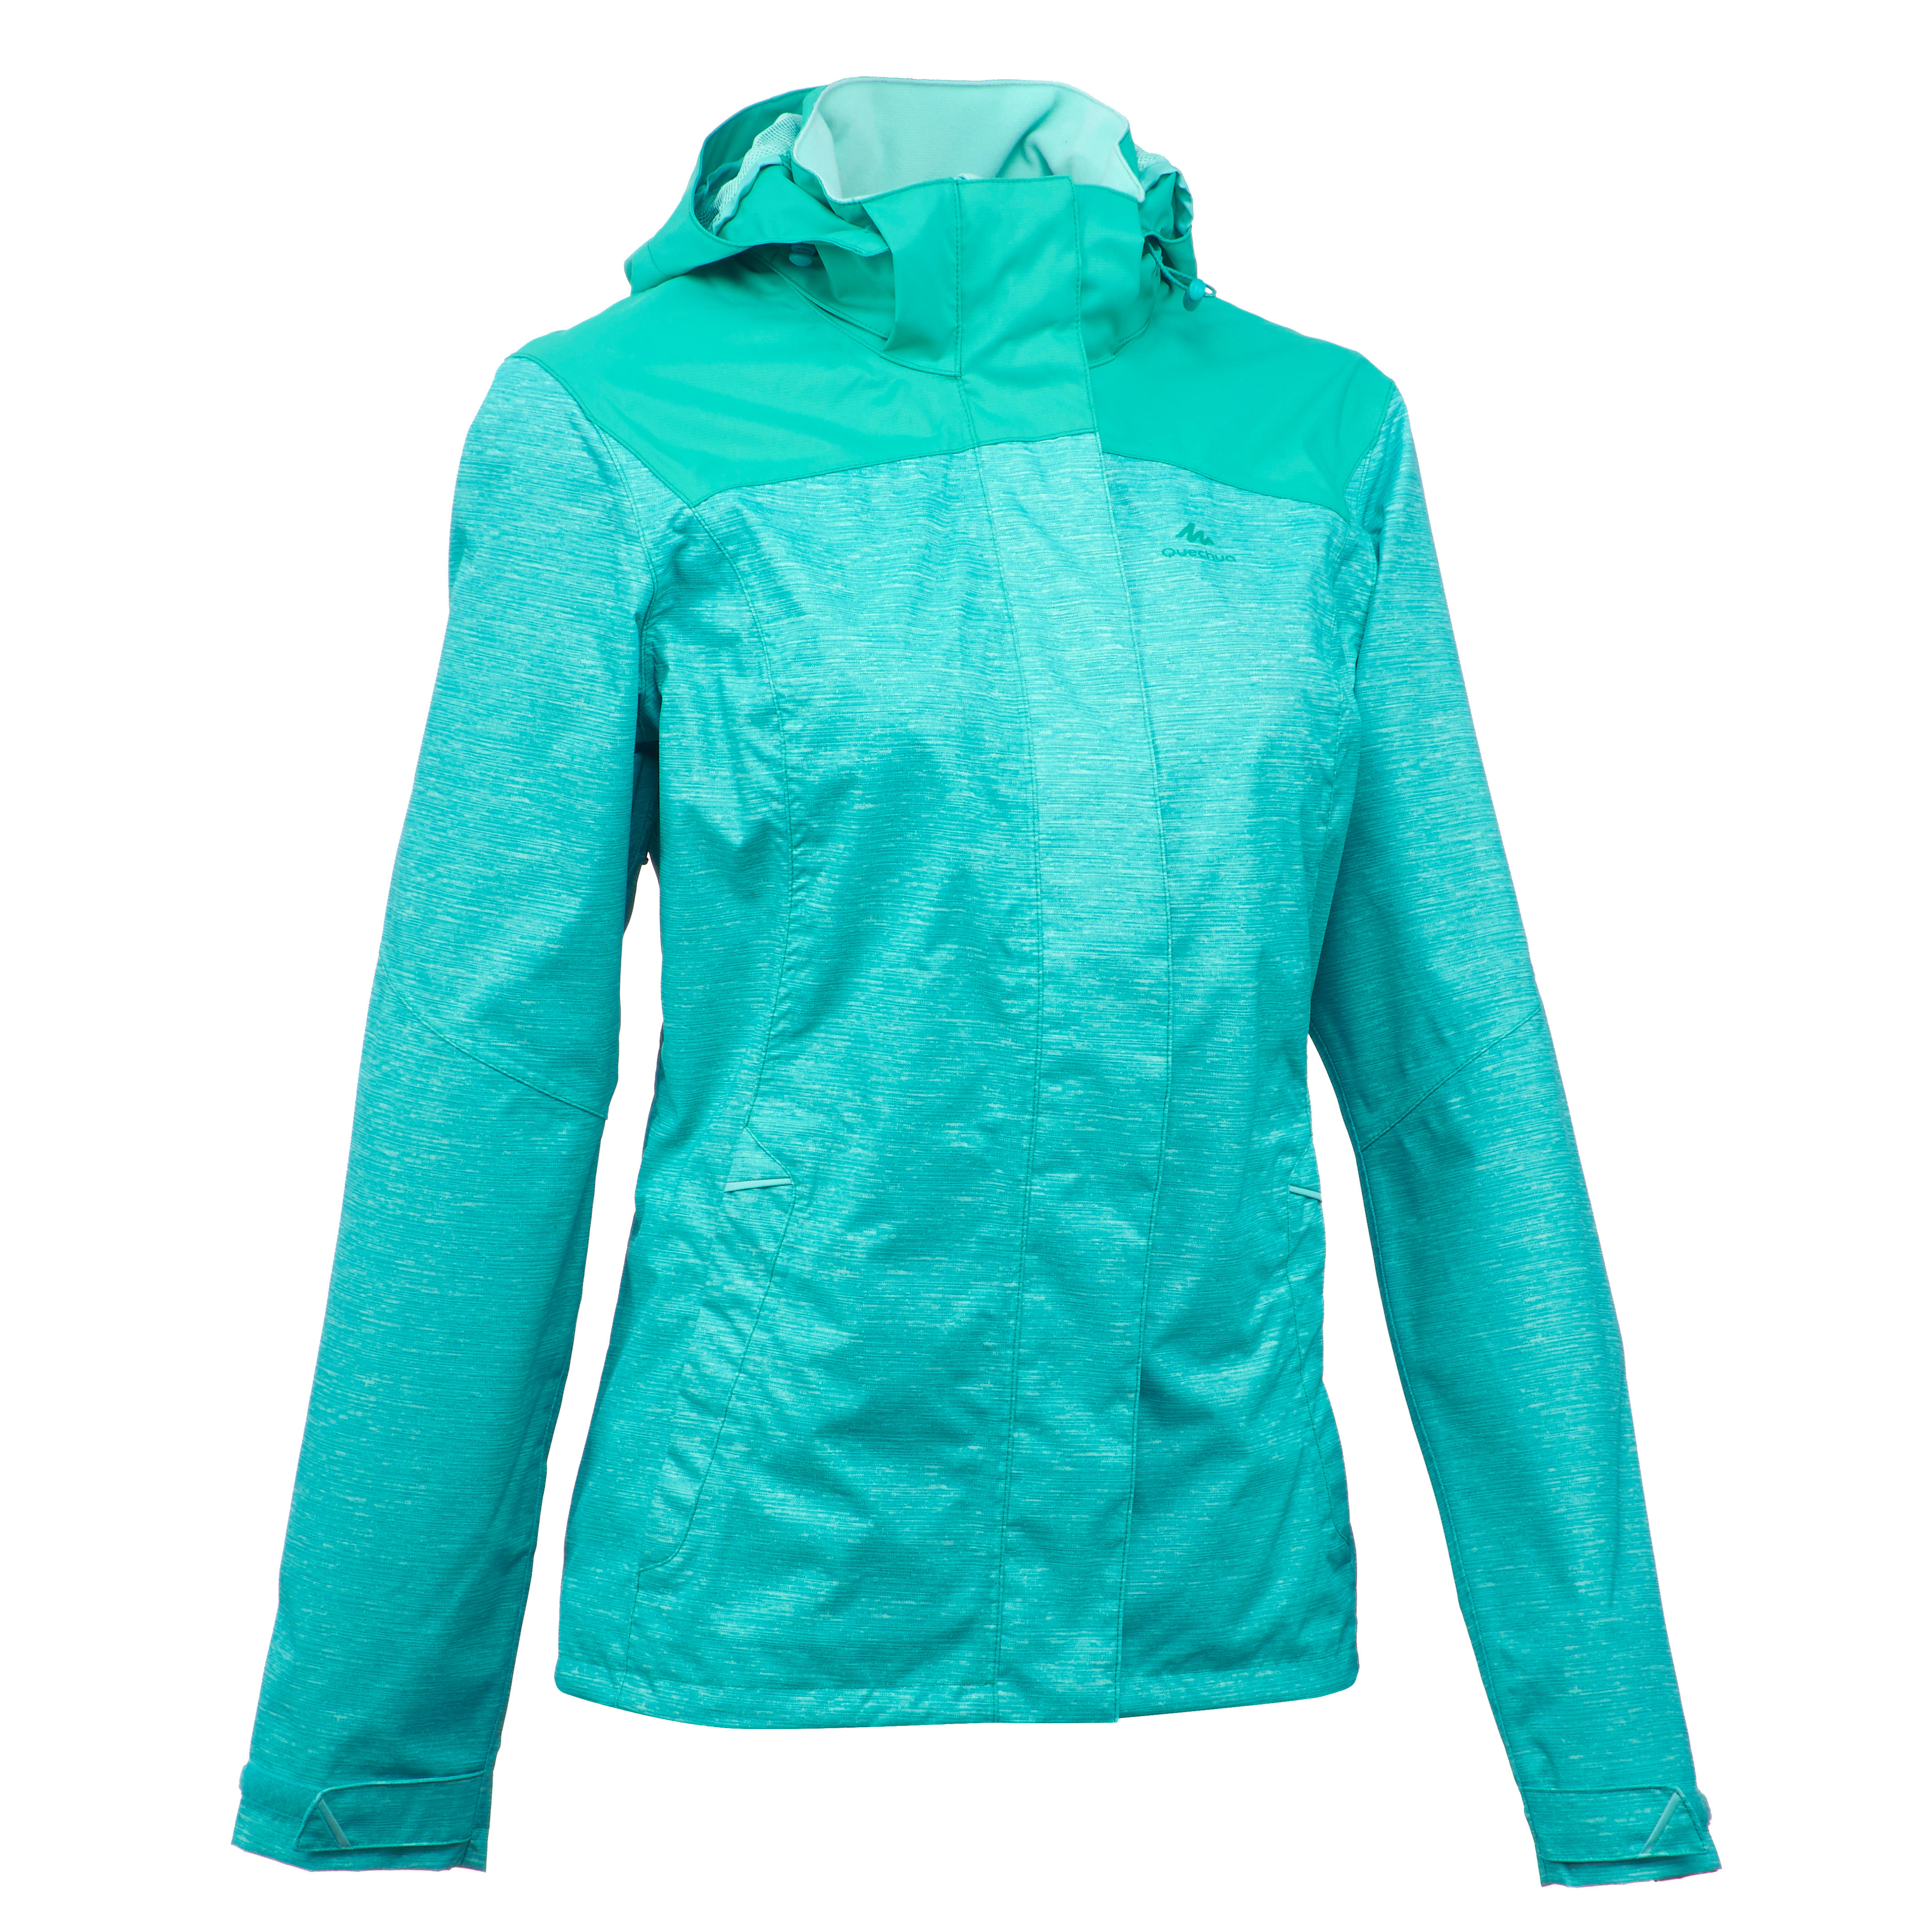 decathlon rain jackets women's